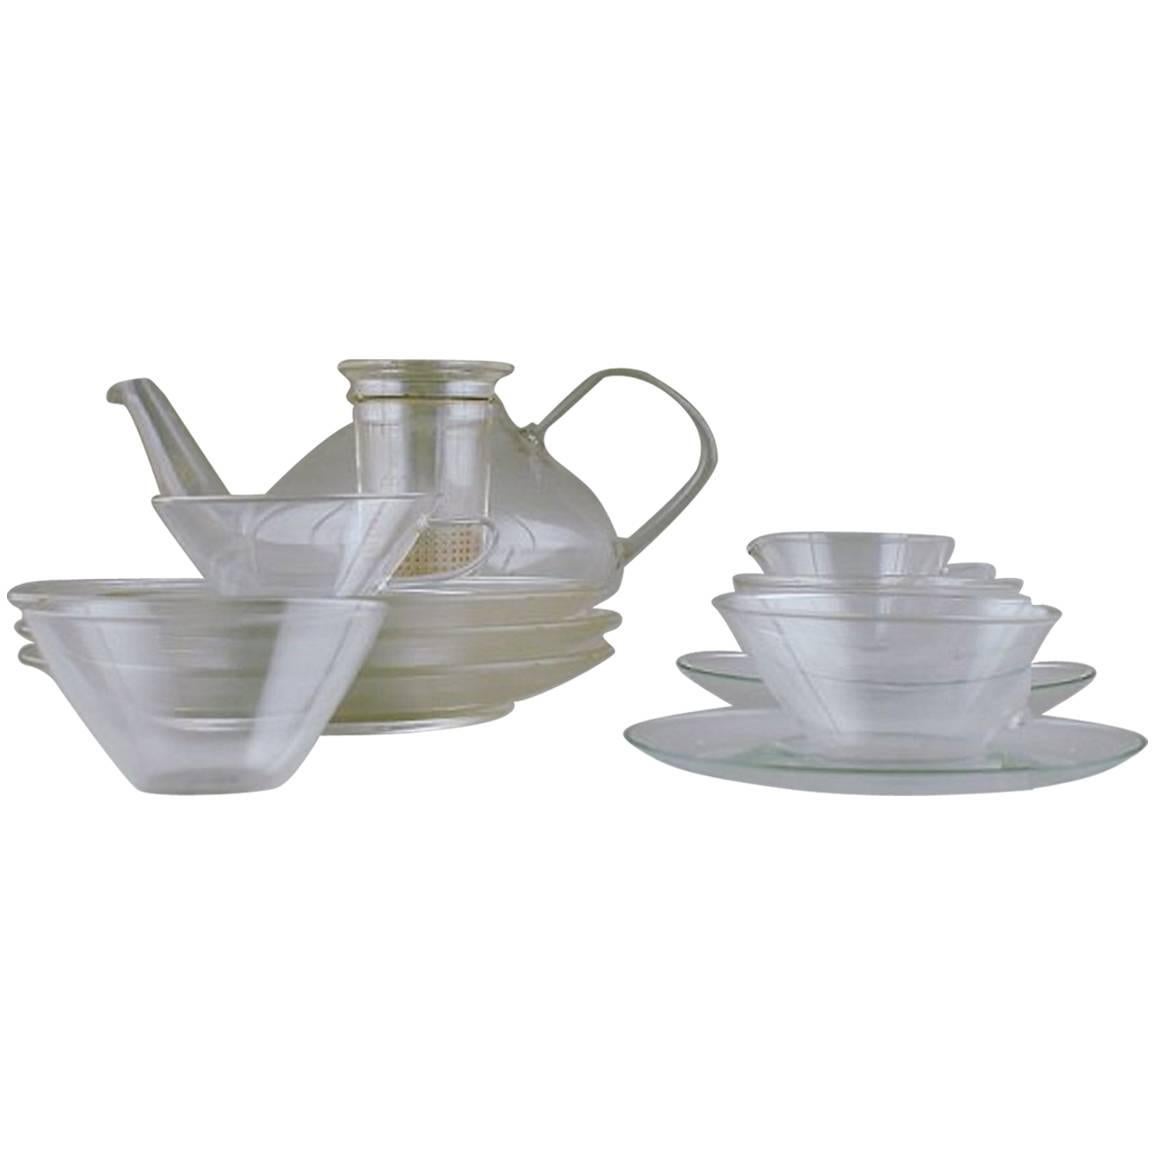 Wilhelm Wagenfeld: "Jena" Tea Set of Clear Glass